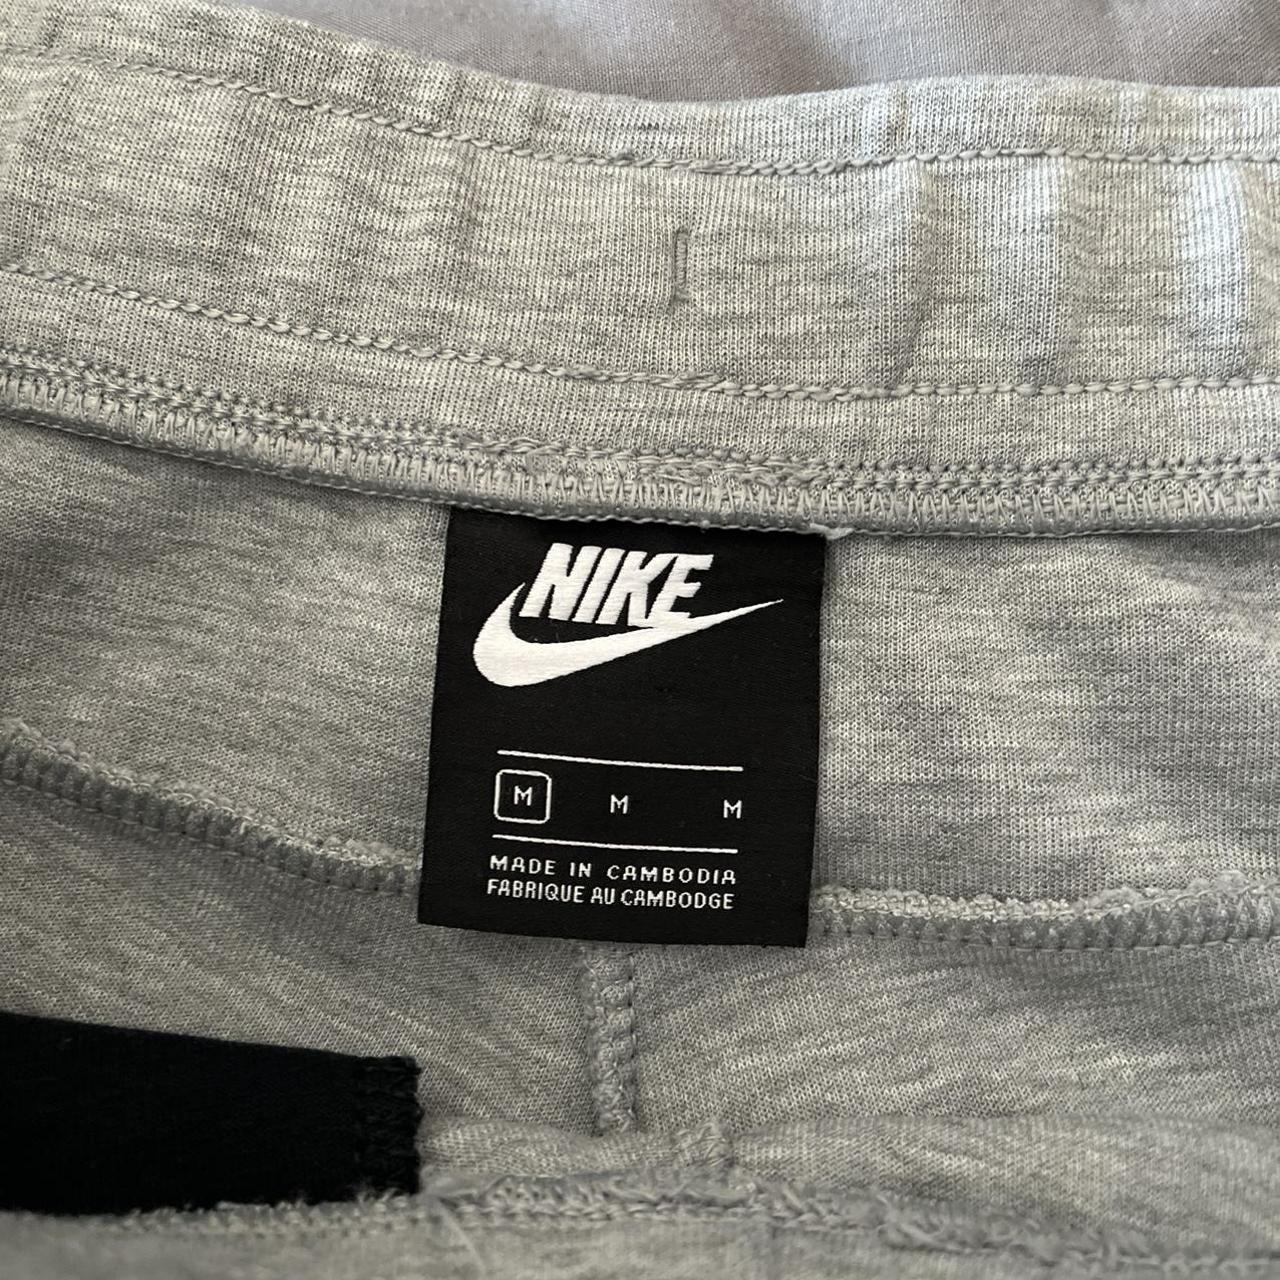 Nike Grey Tech fleece Bottoms 9/10 condition been... - Depop